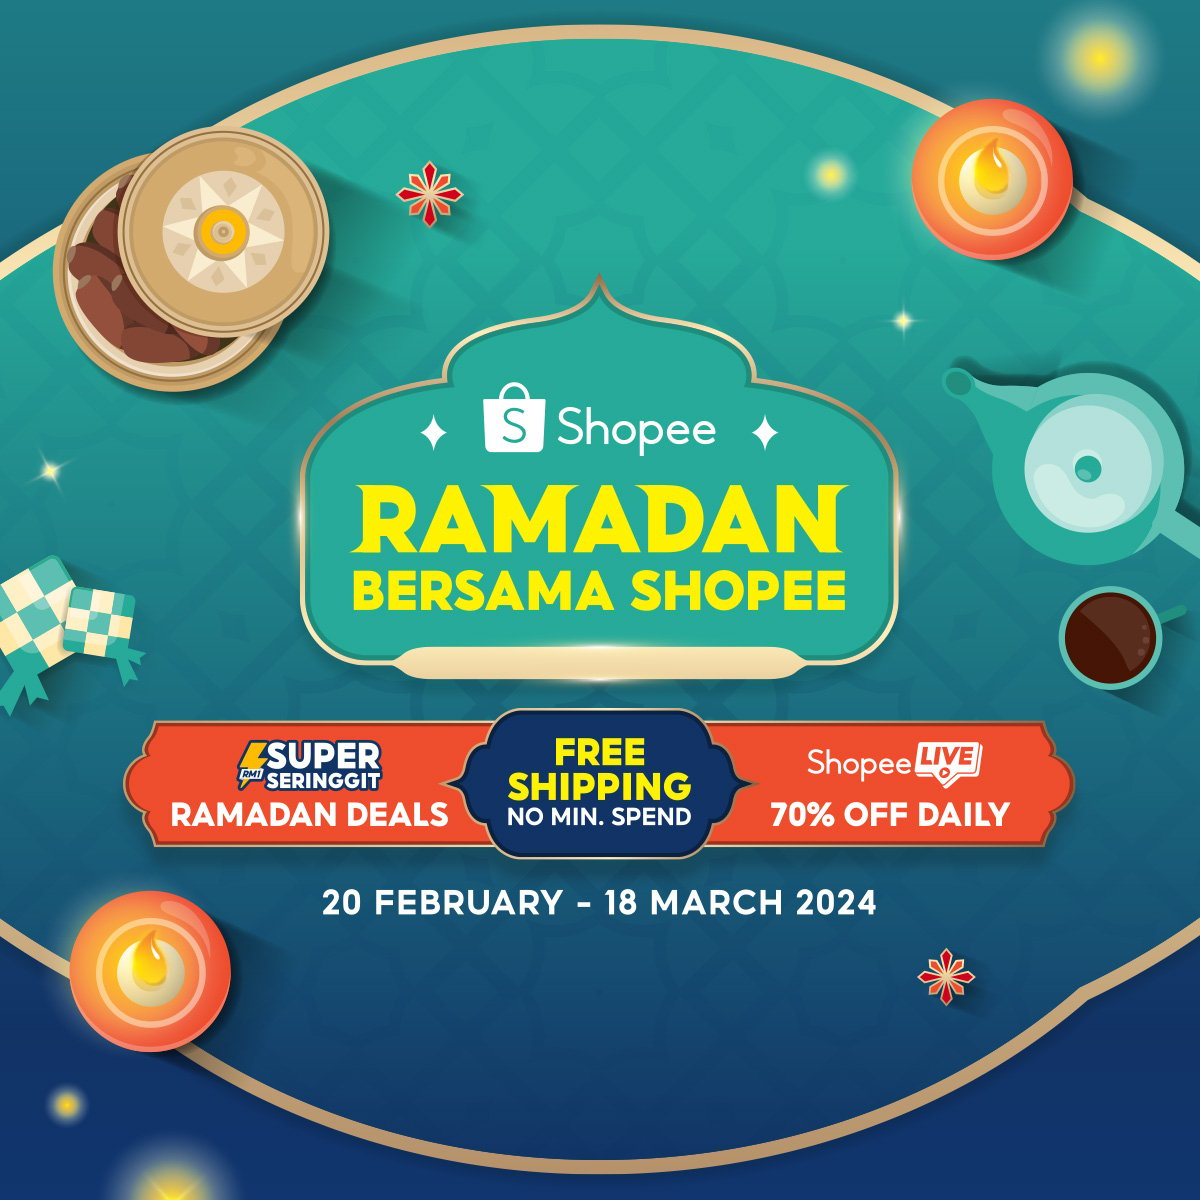 🌙 Get ready for Ramadan Bersama Shopee!!
👉PROMO CODE : SHPRRST
Free Shipping No Min. Spend
Super Seringgit Ramadan Deals
70% Off Shopee Live Daily
#ramadanbersamashopee #ShopeeMY 

👉Shop online with Shopee NOW!! : 
invl.io/clkrbry